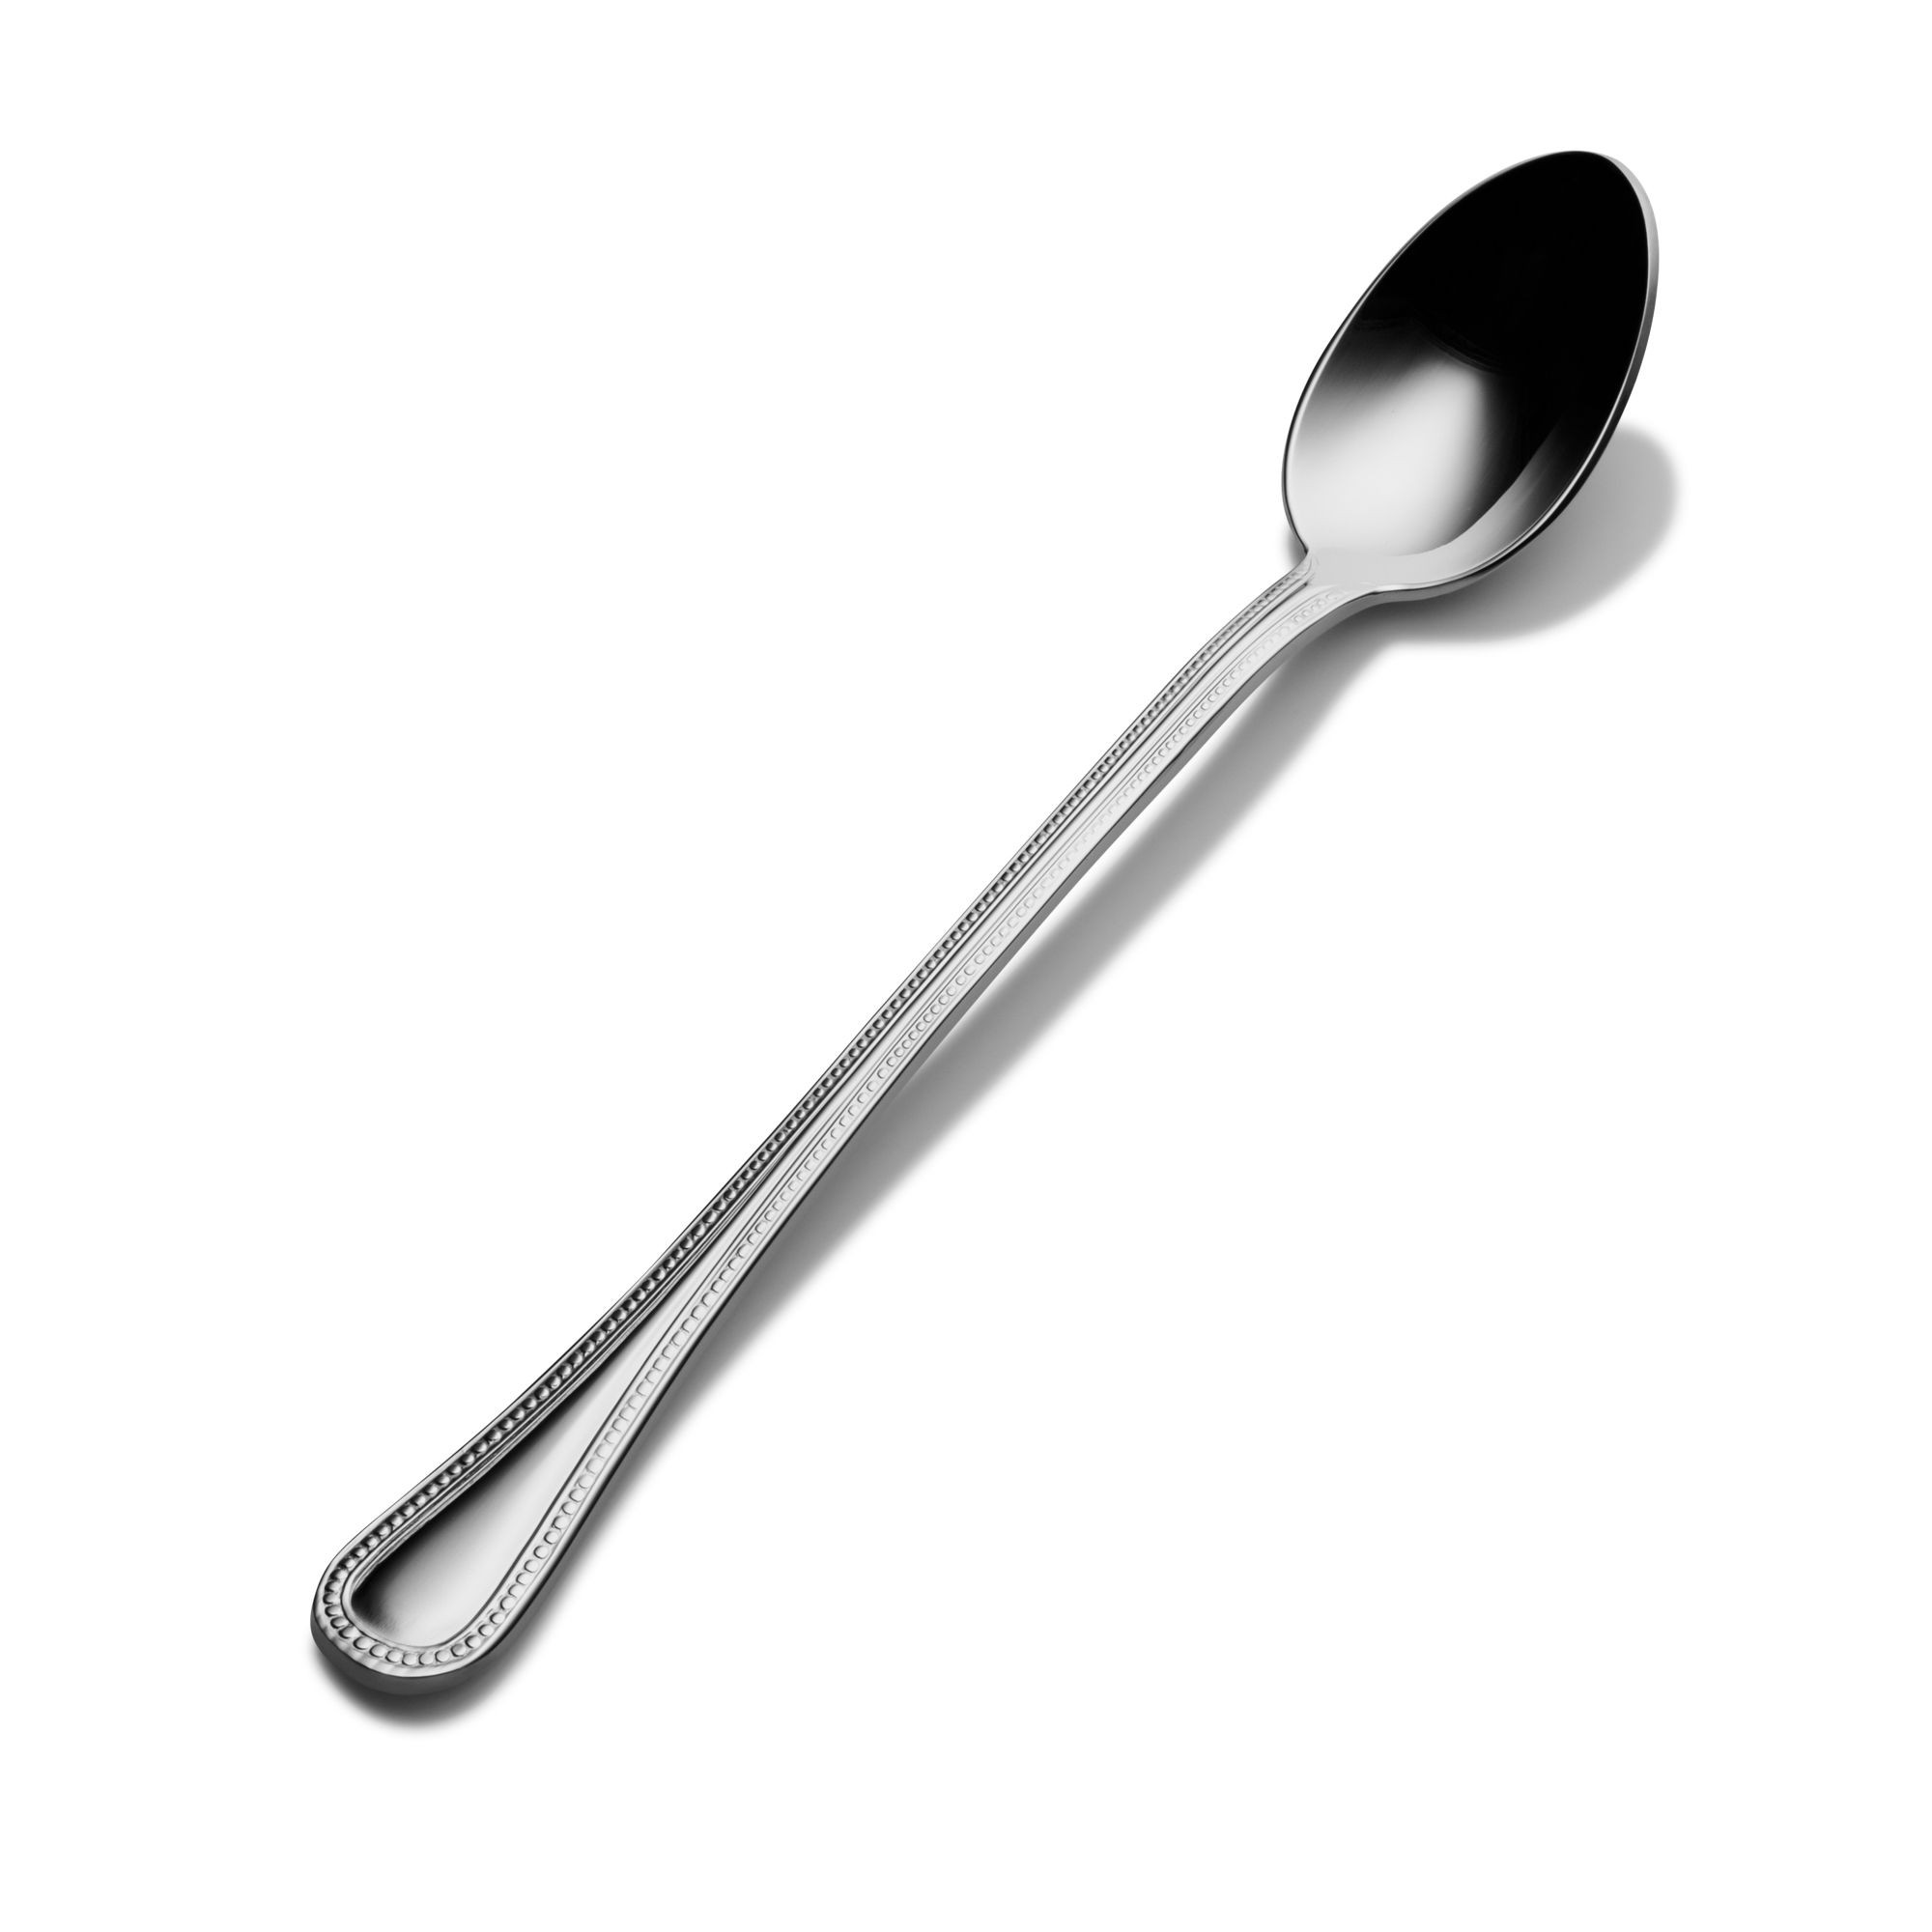 Bon Chef S1002 Sombrero 18/8 Stainless Steel Iced Tea Spoon